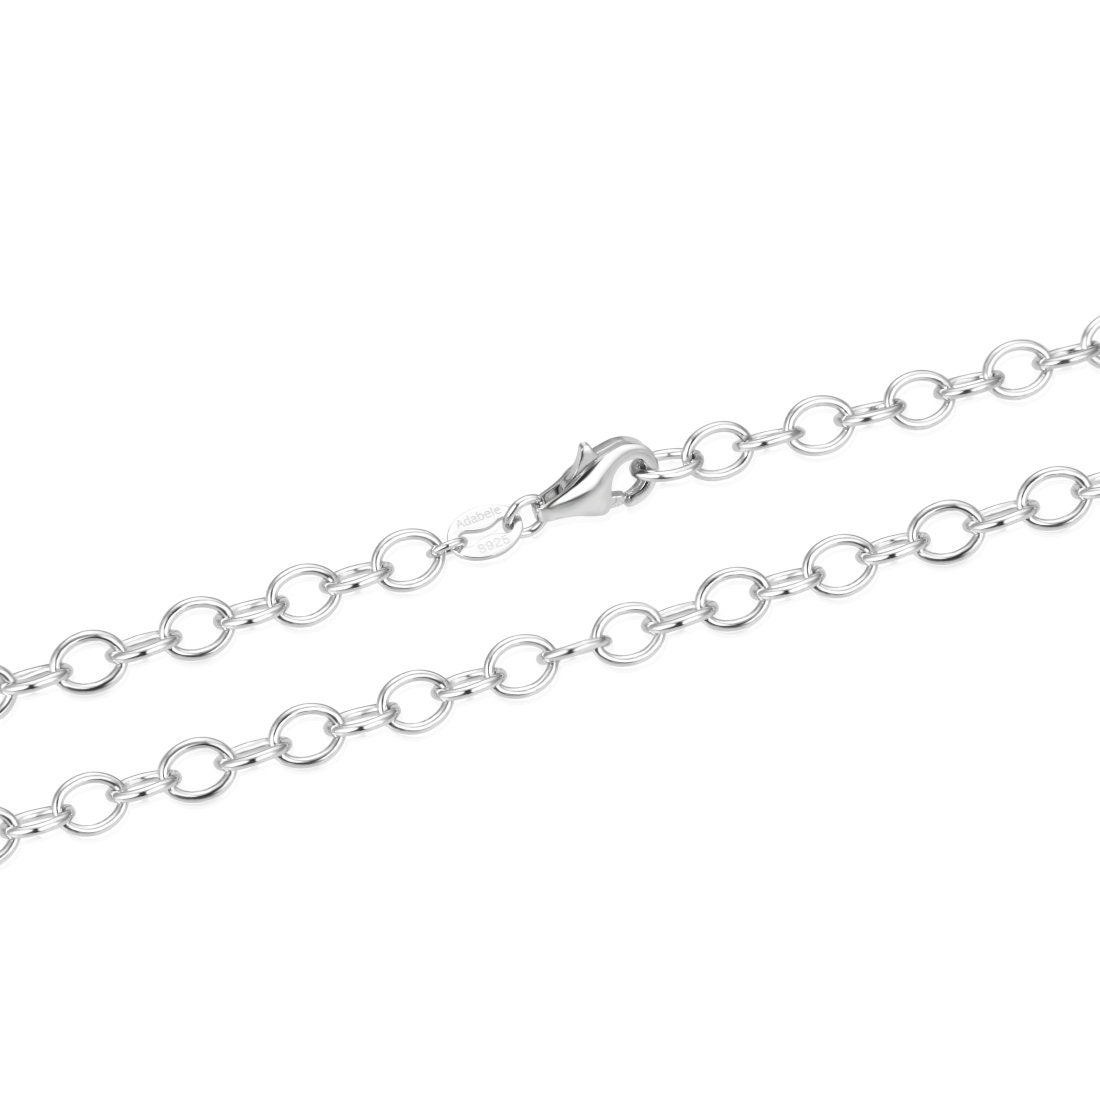 1pc Black Clover & Rhinestone Decor Fashionable Elegant Women's Chain  Bracelet (Without Packaging Box)